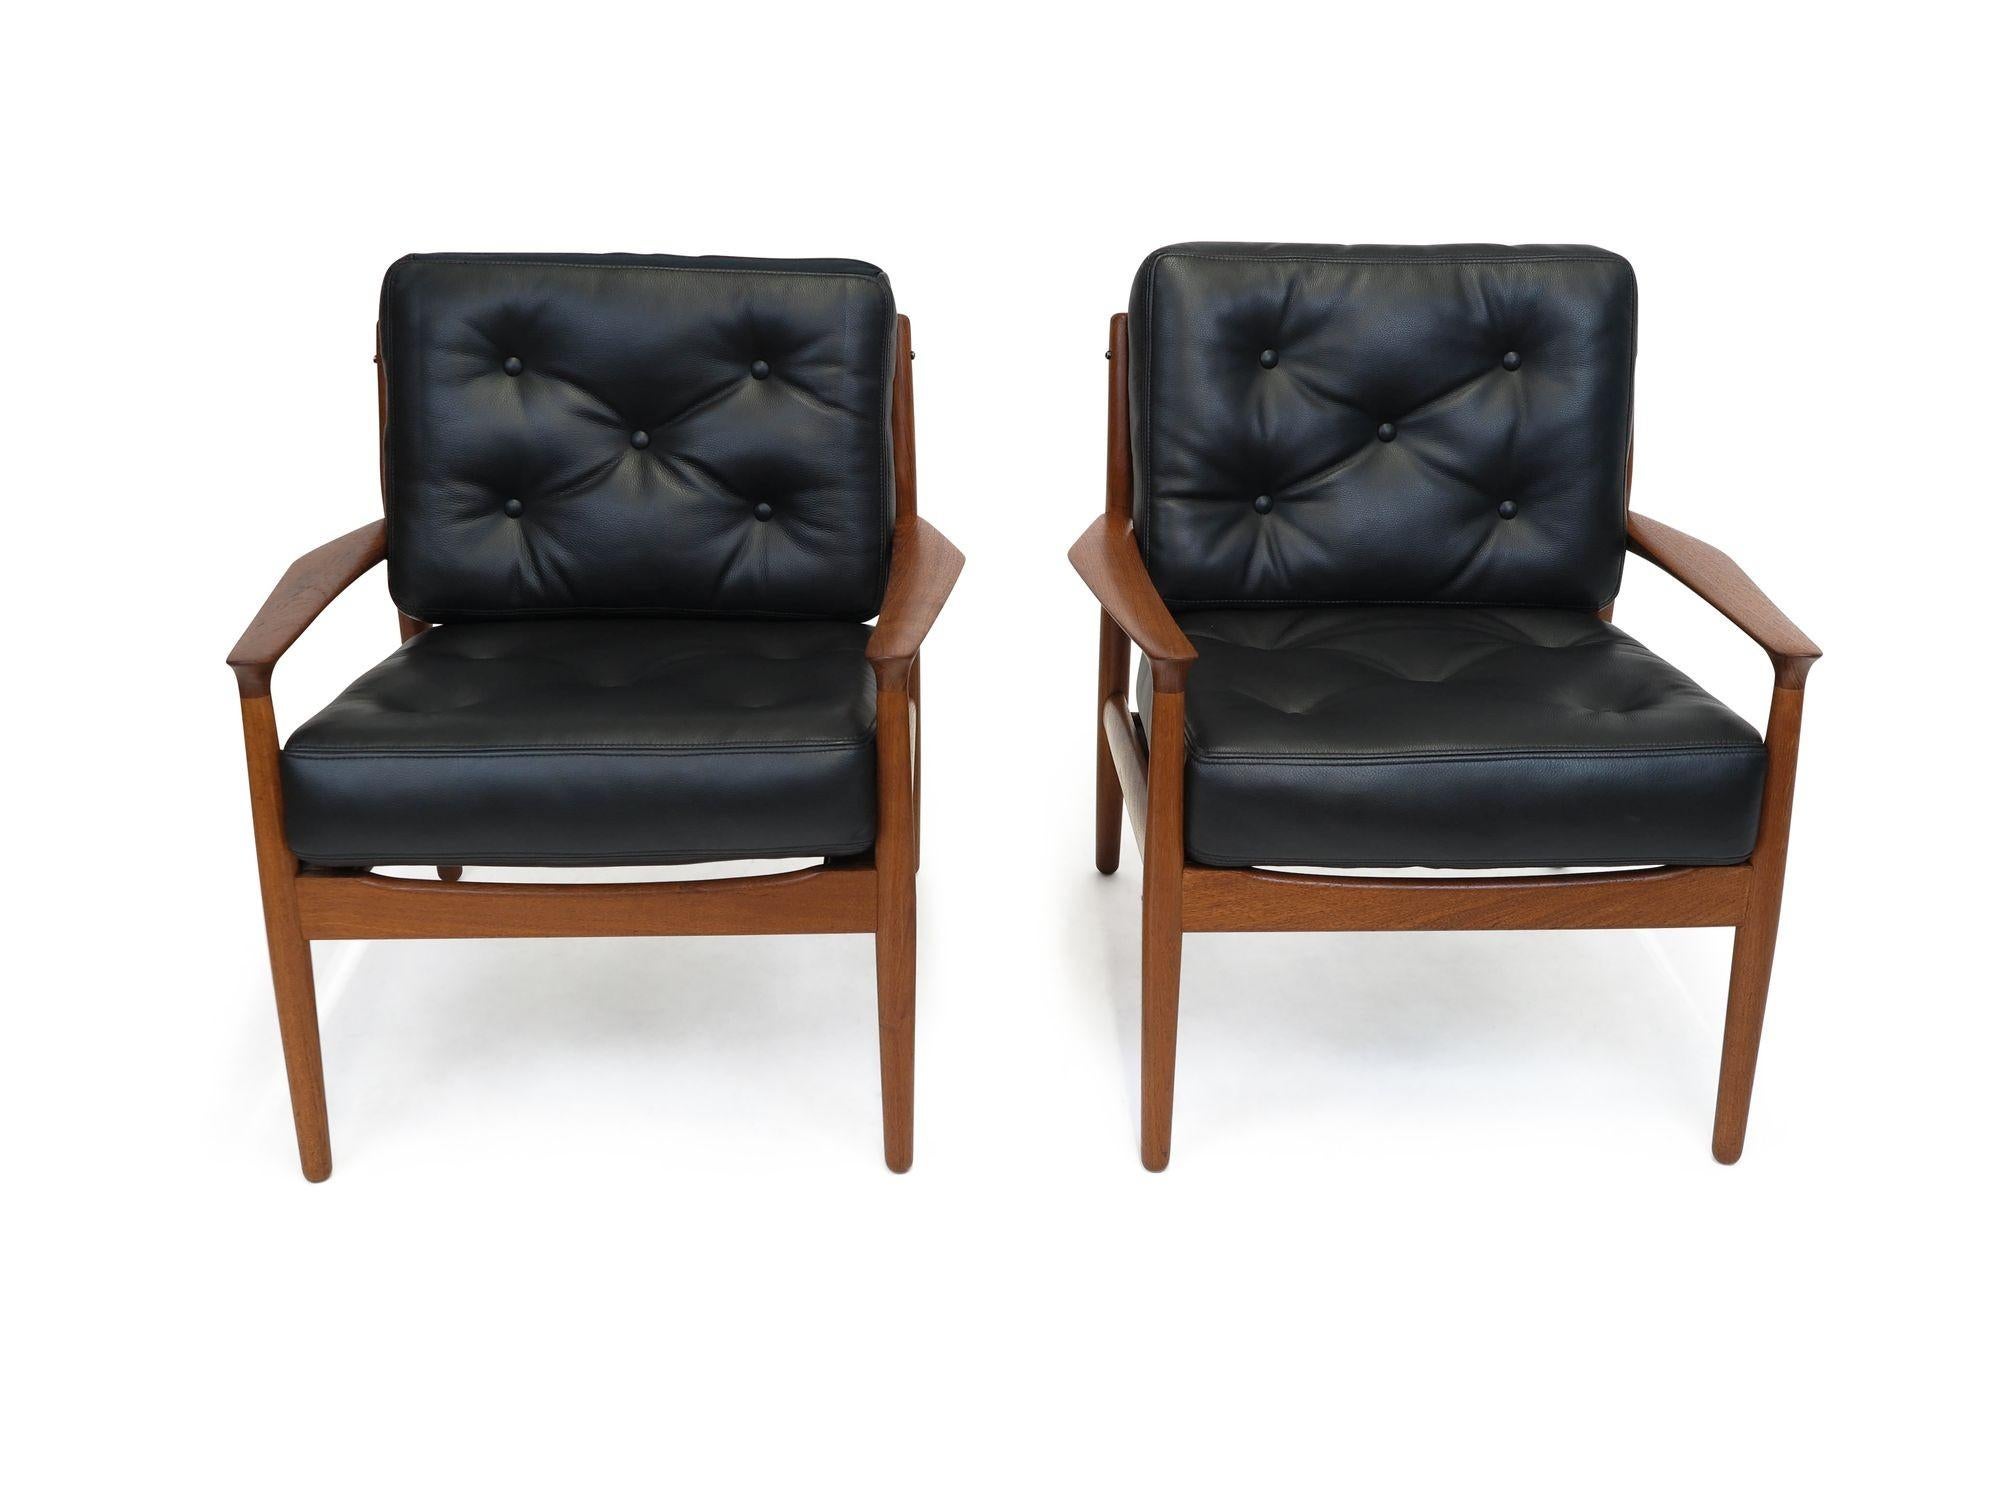 Grete Jalk Danish Teak Lounge Chairs in Black Leather 1